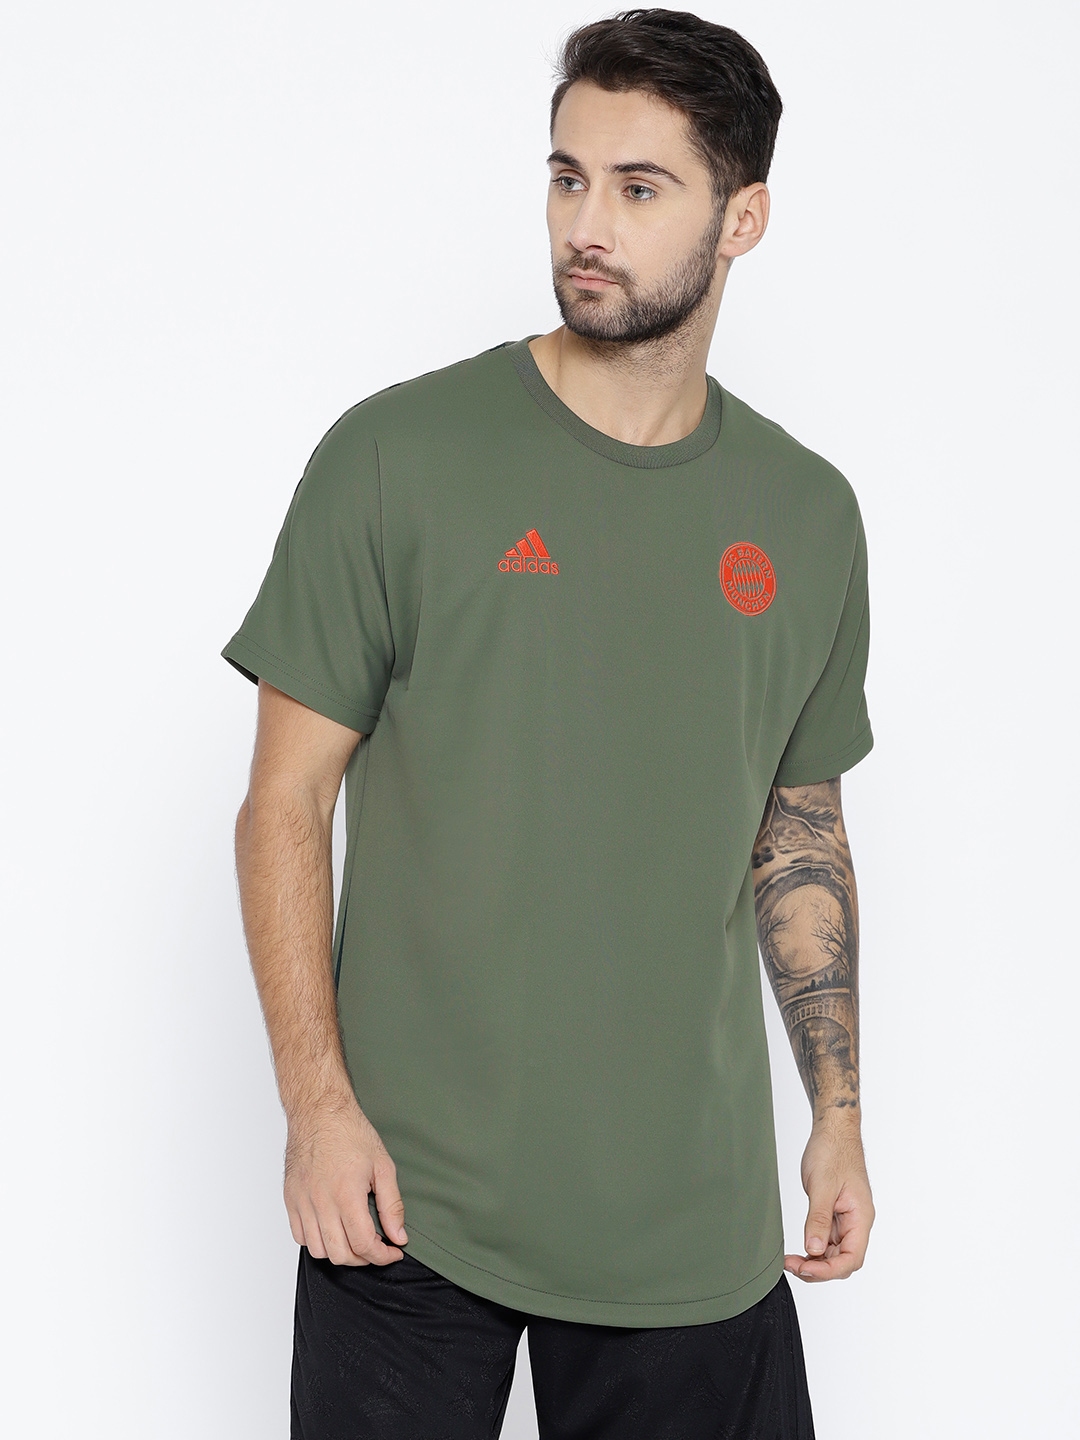 adidas army green shirt